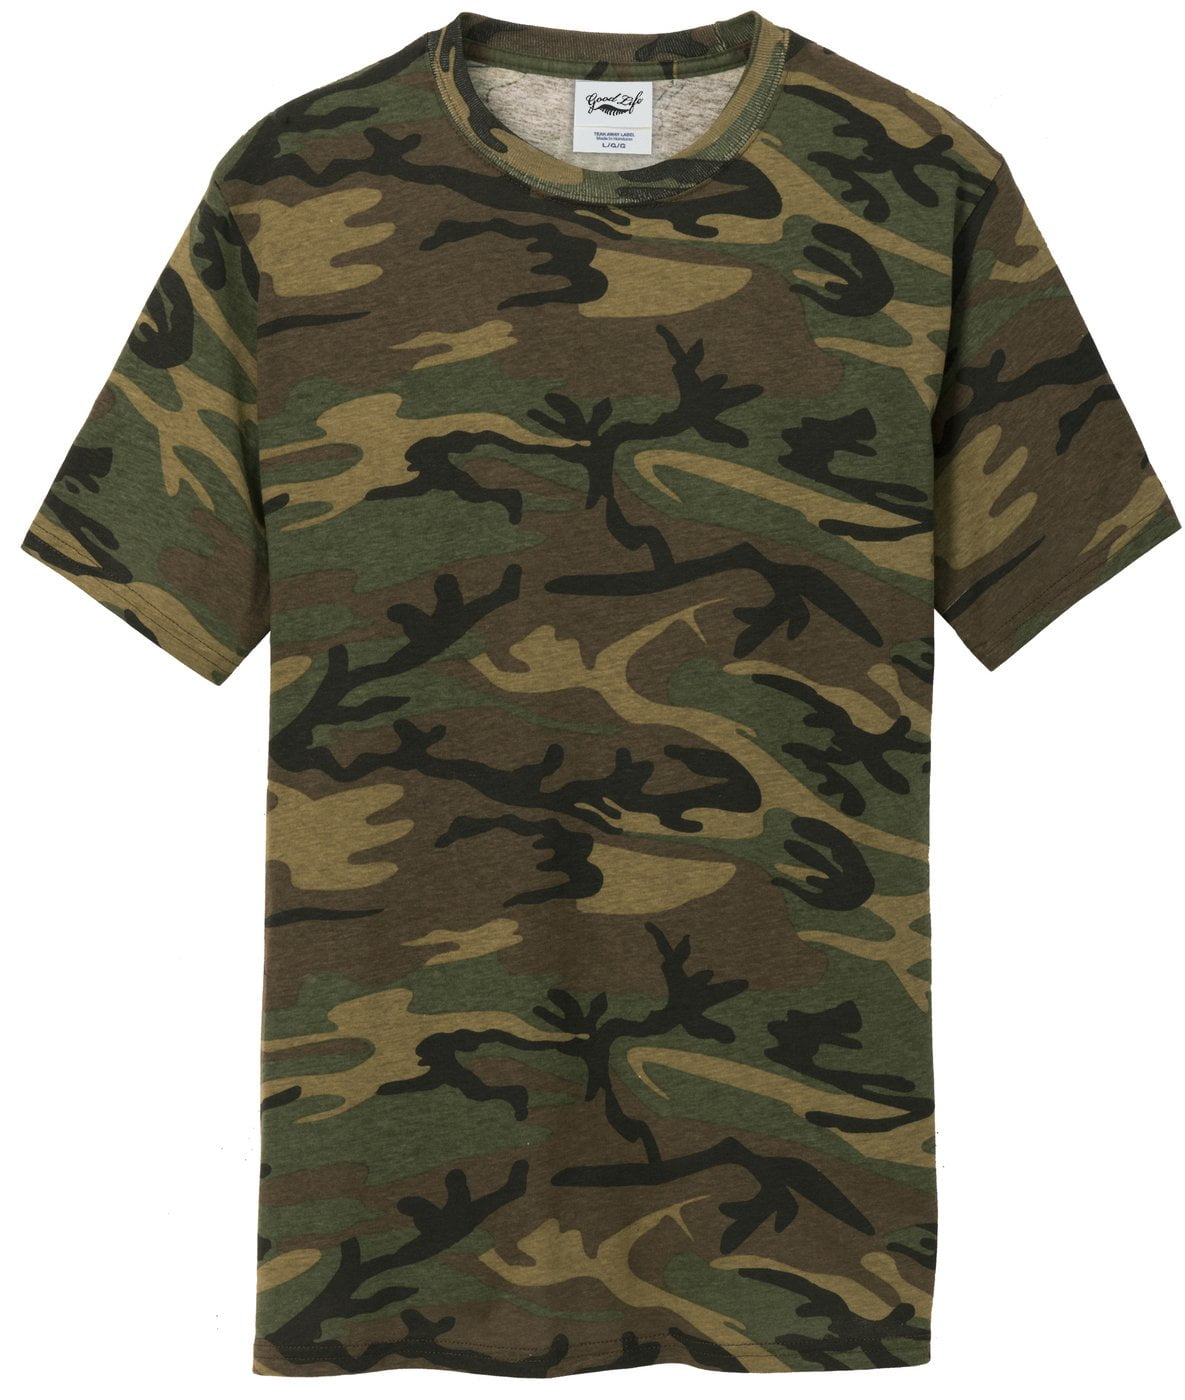 Good Life Apparel - Mens Cotton Camo Tee Shirt Camouflage T-shirts ...